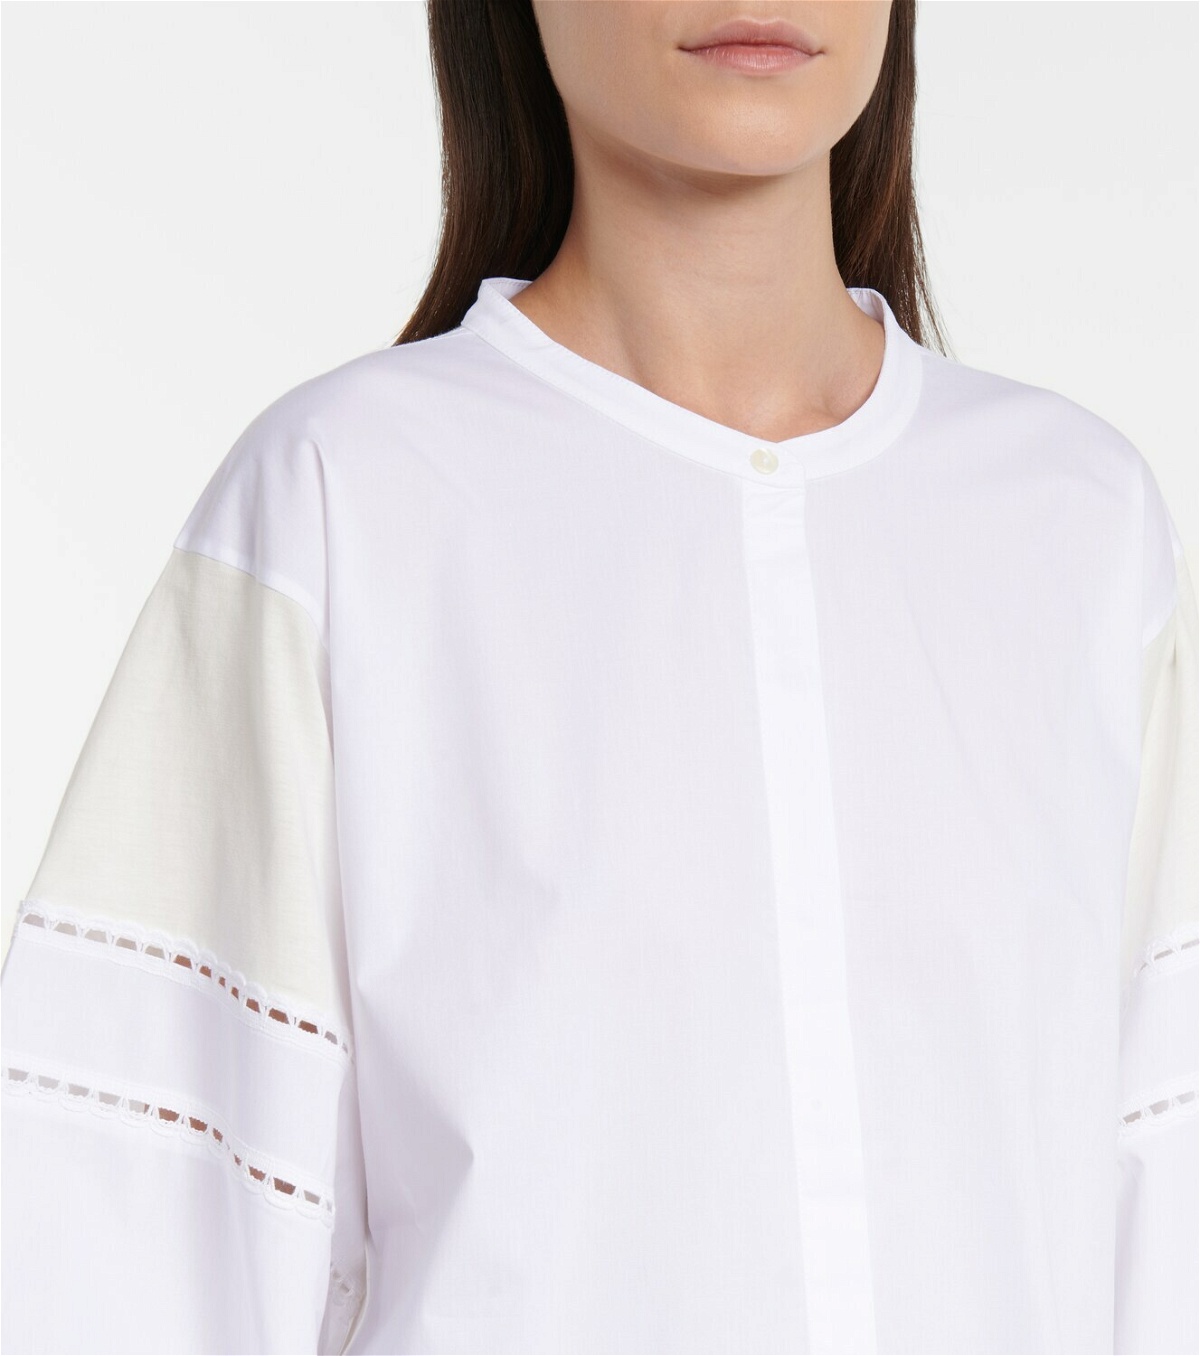 Dorothee Schumacher - Lace Lines cotton blouse Dorothee Schumacher